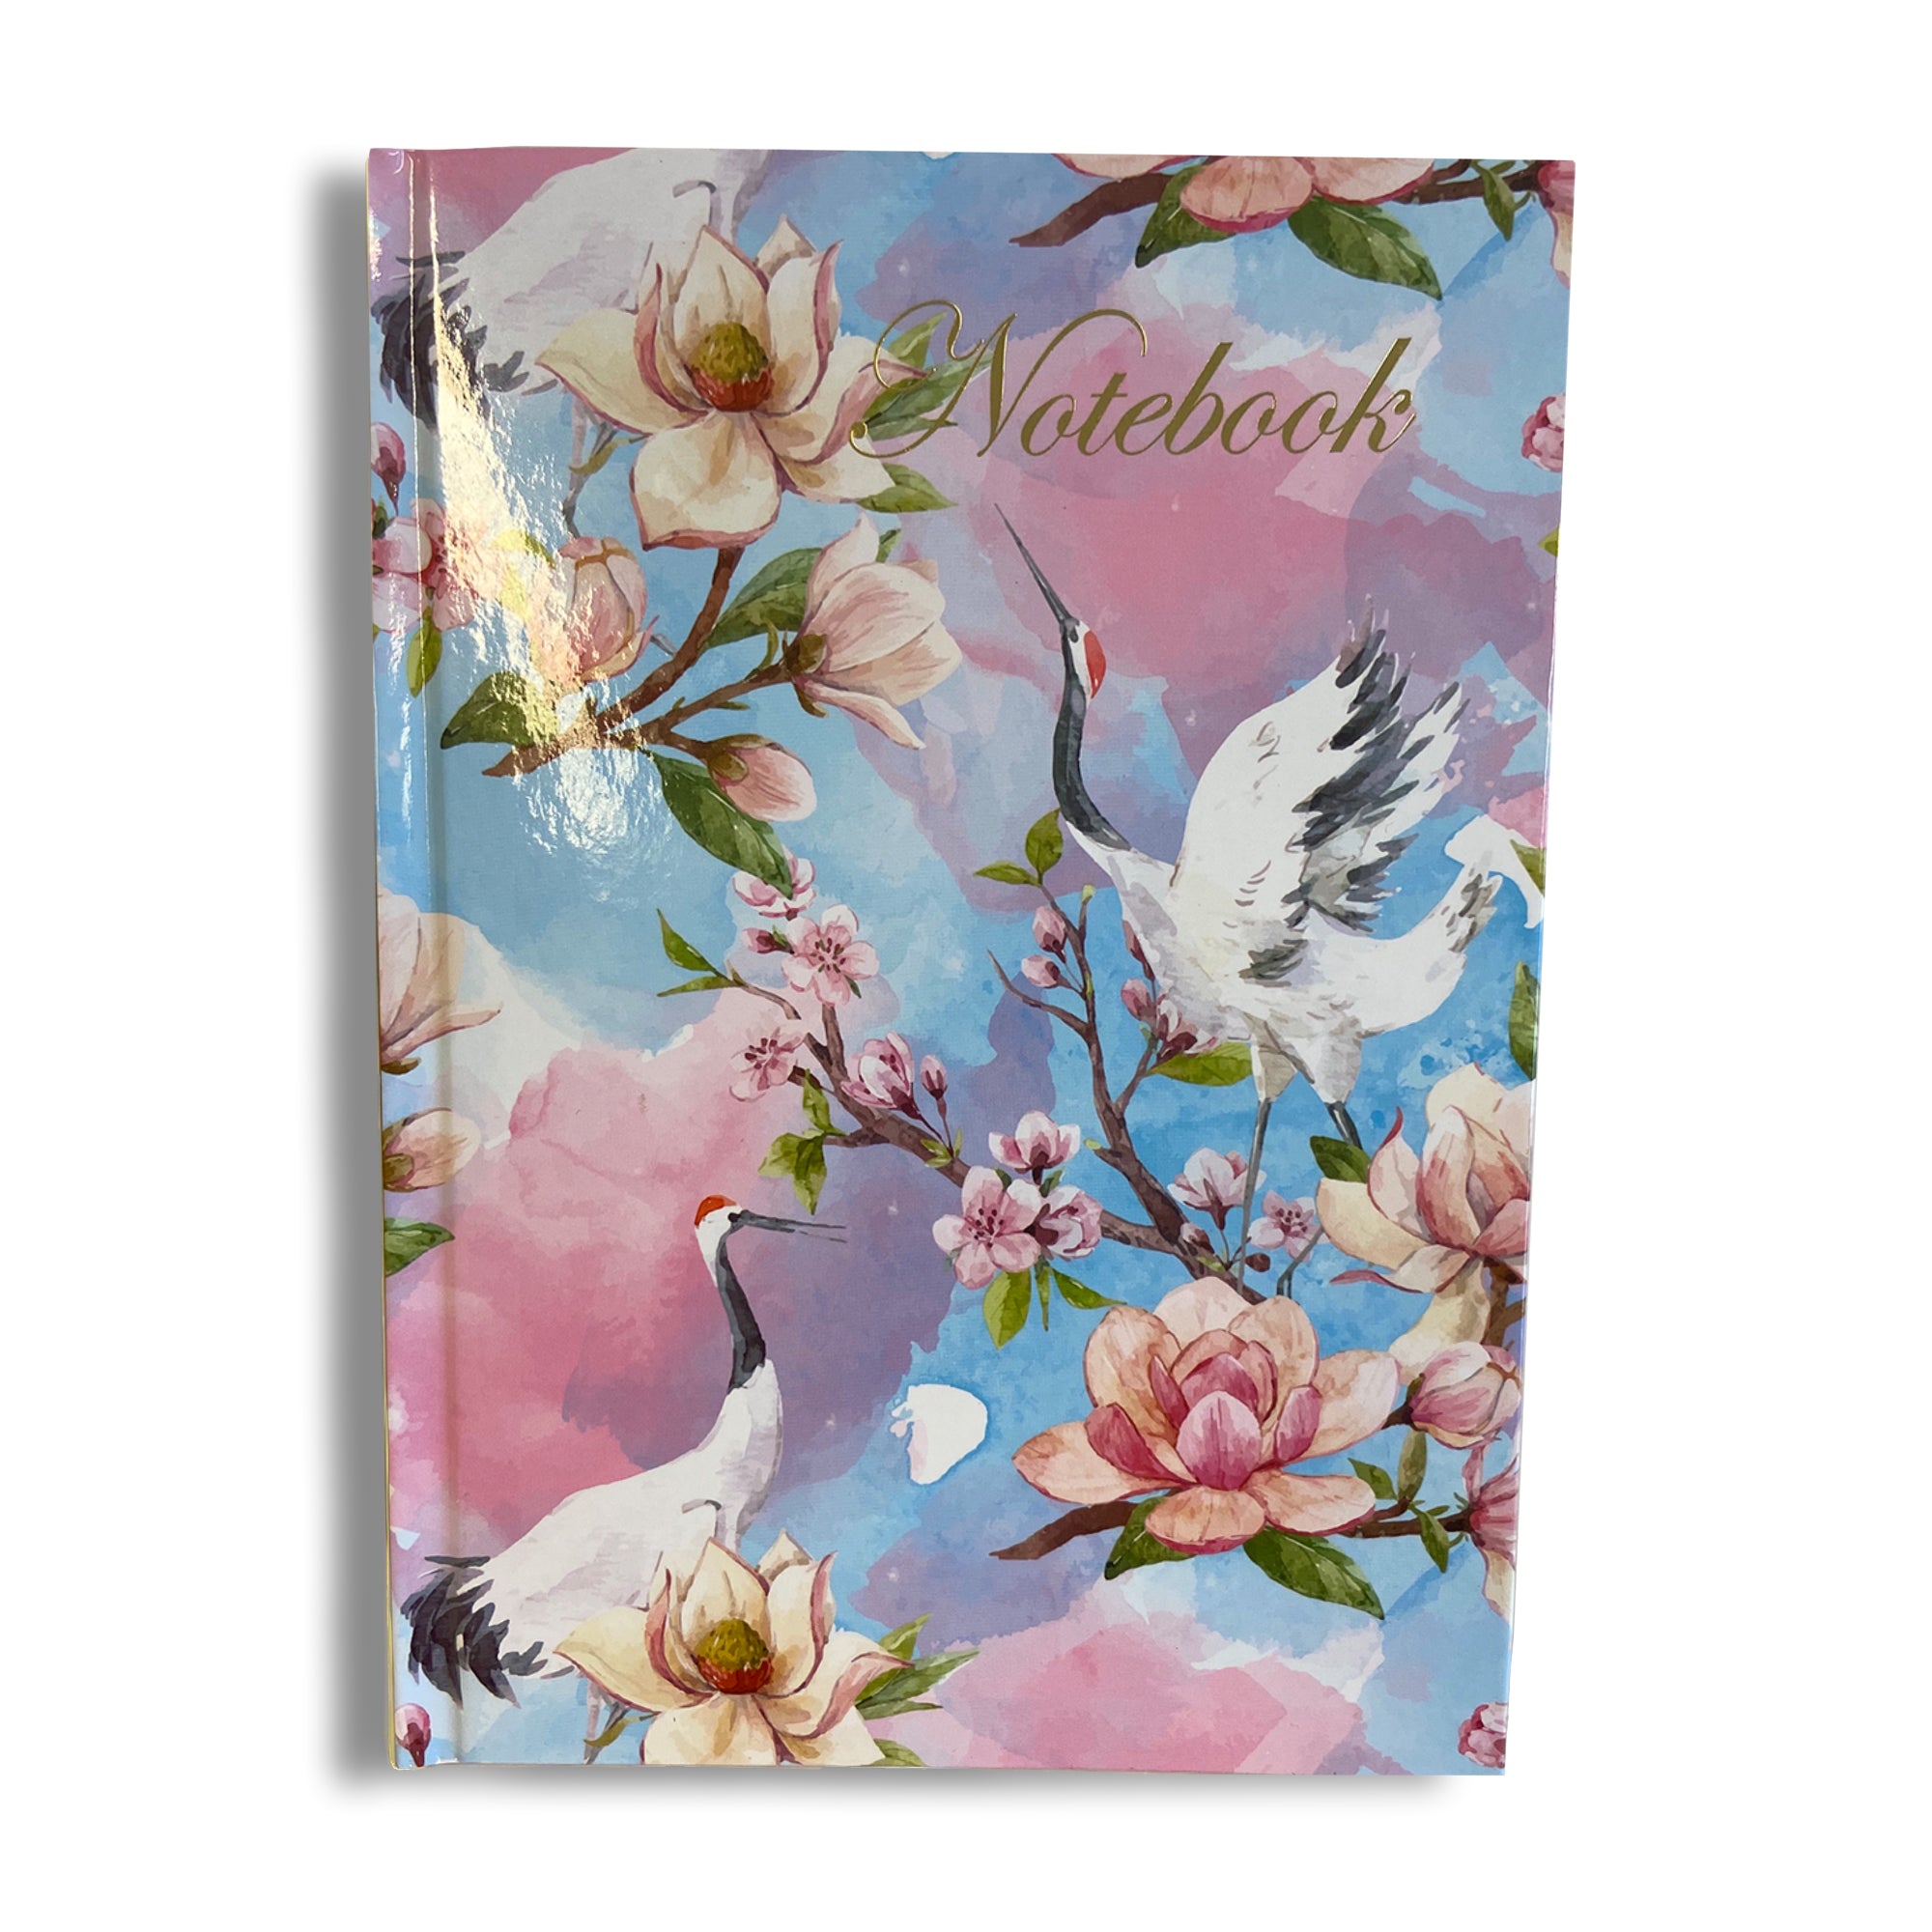 Magnolia Cranes Notebook A5